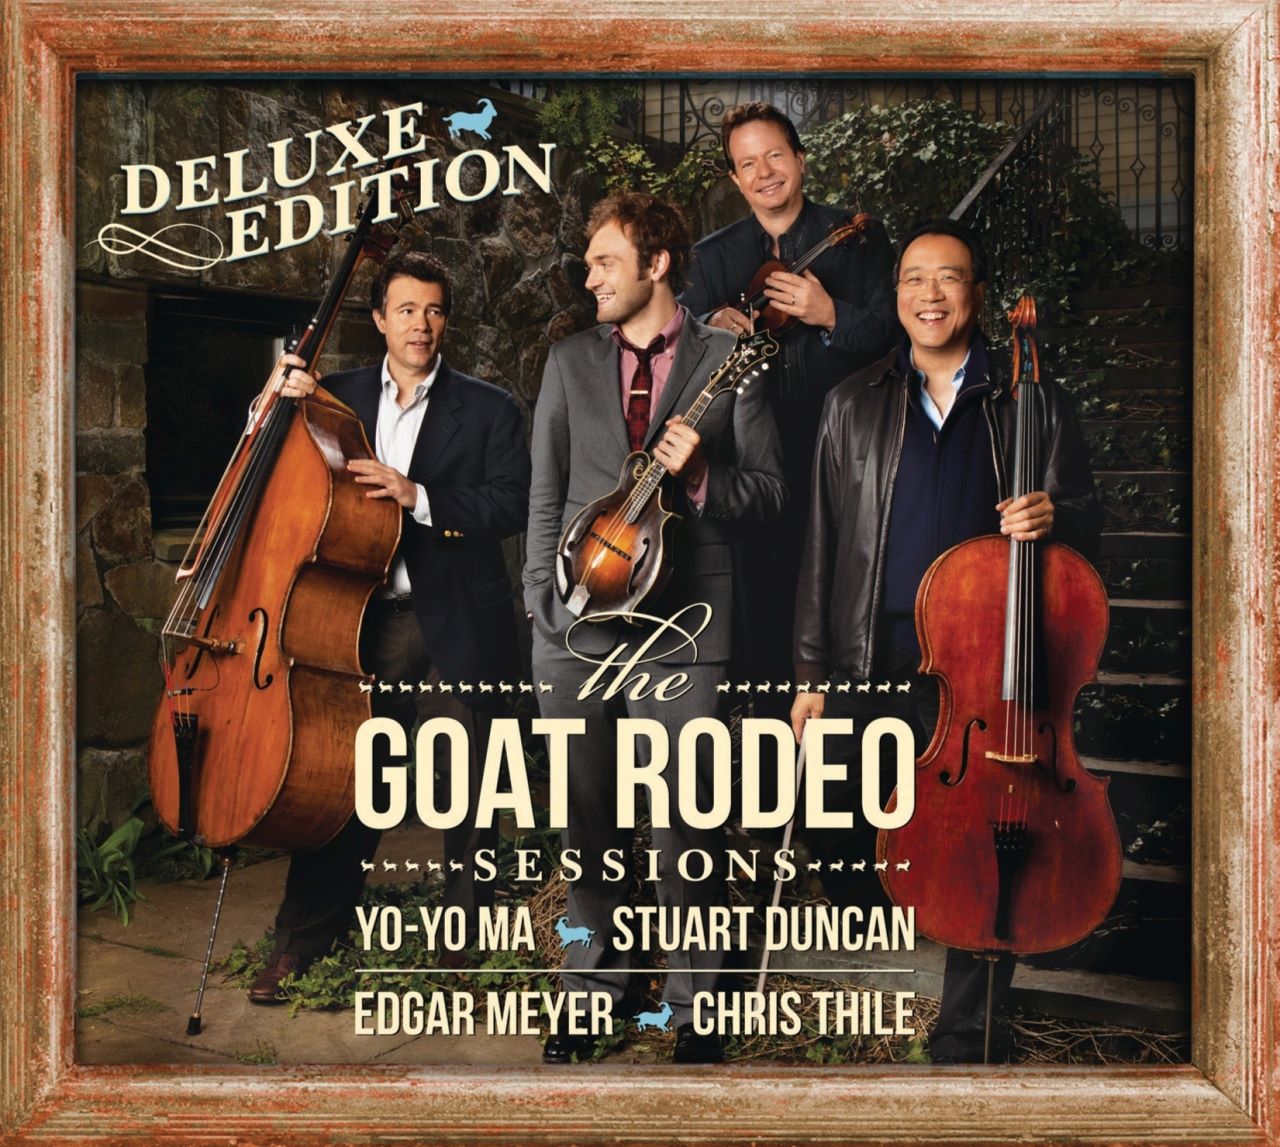 Yo Yo Ma, Stuart Duncan, Edgar Meyer, Christ Thile - The Goat Rodeo Sessions cover album